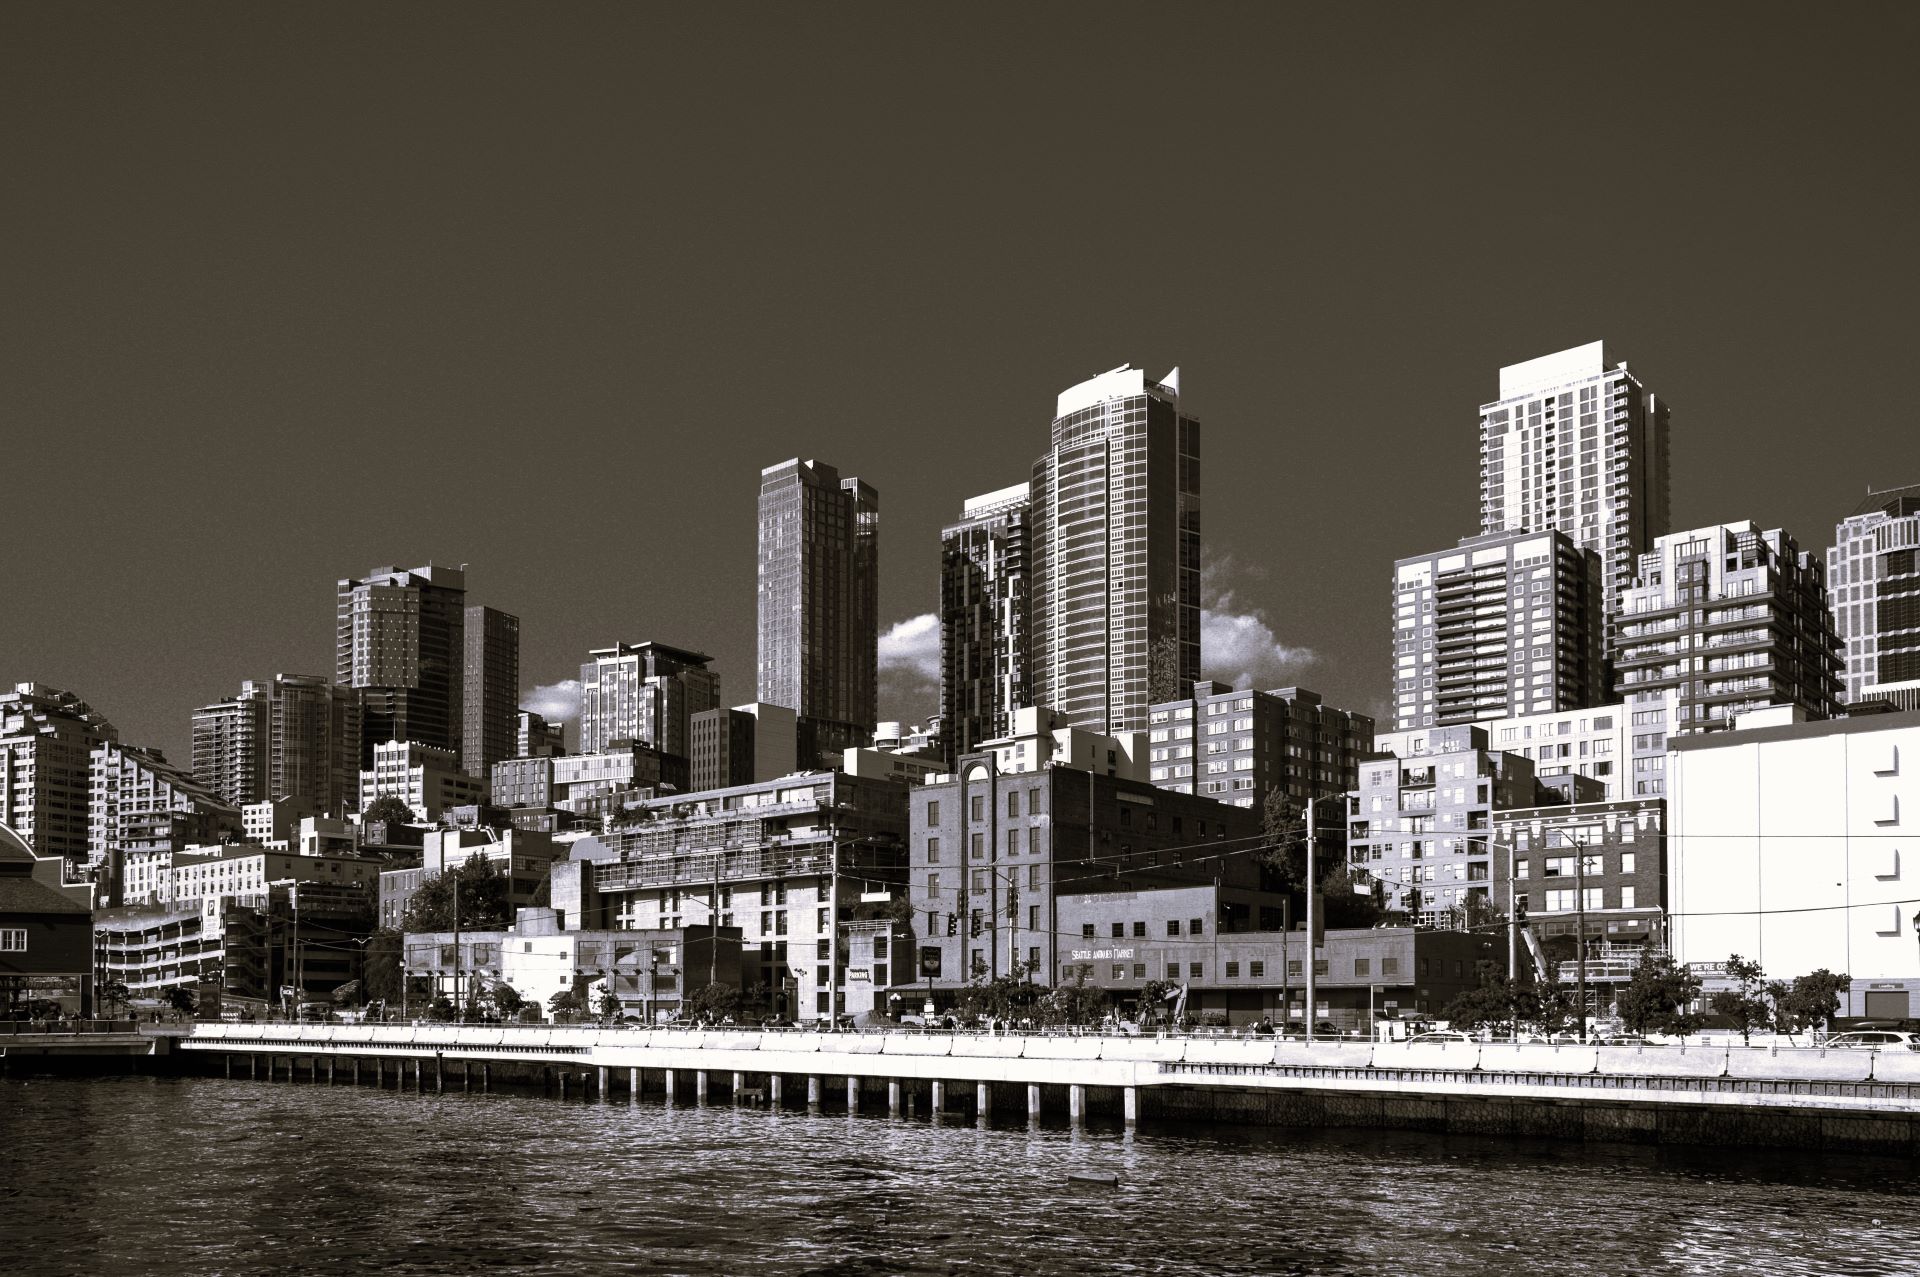 City of Boston Header image